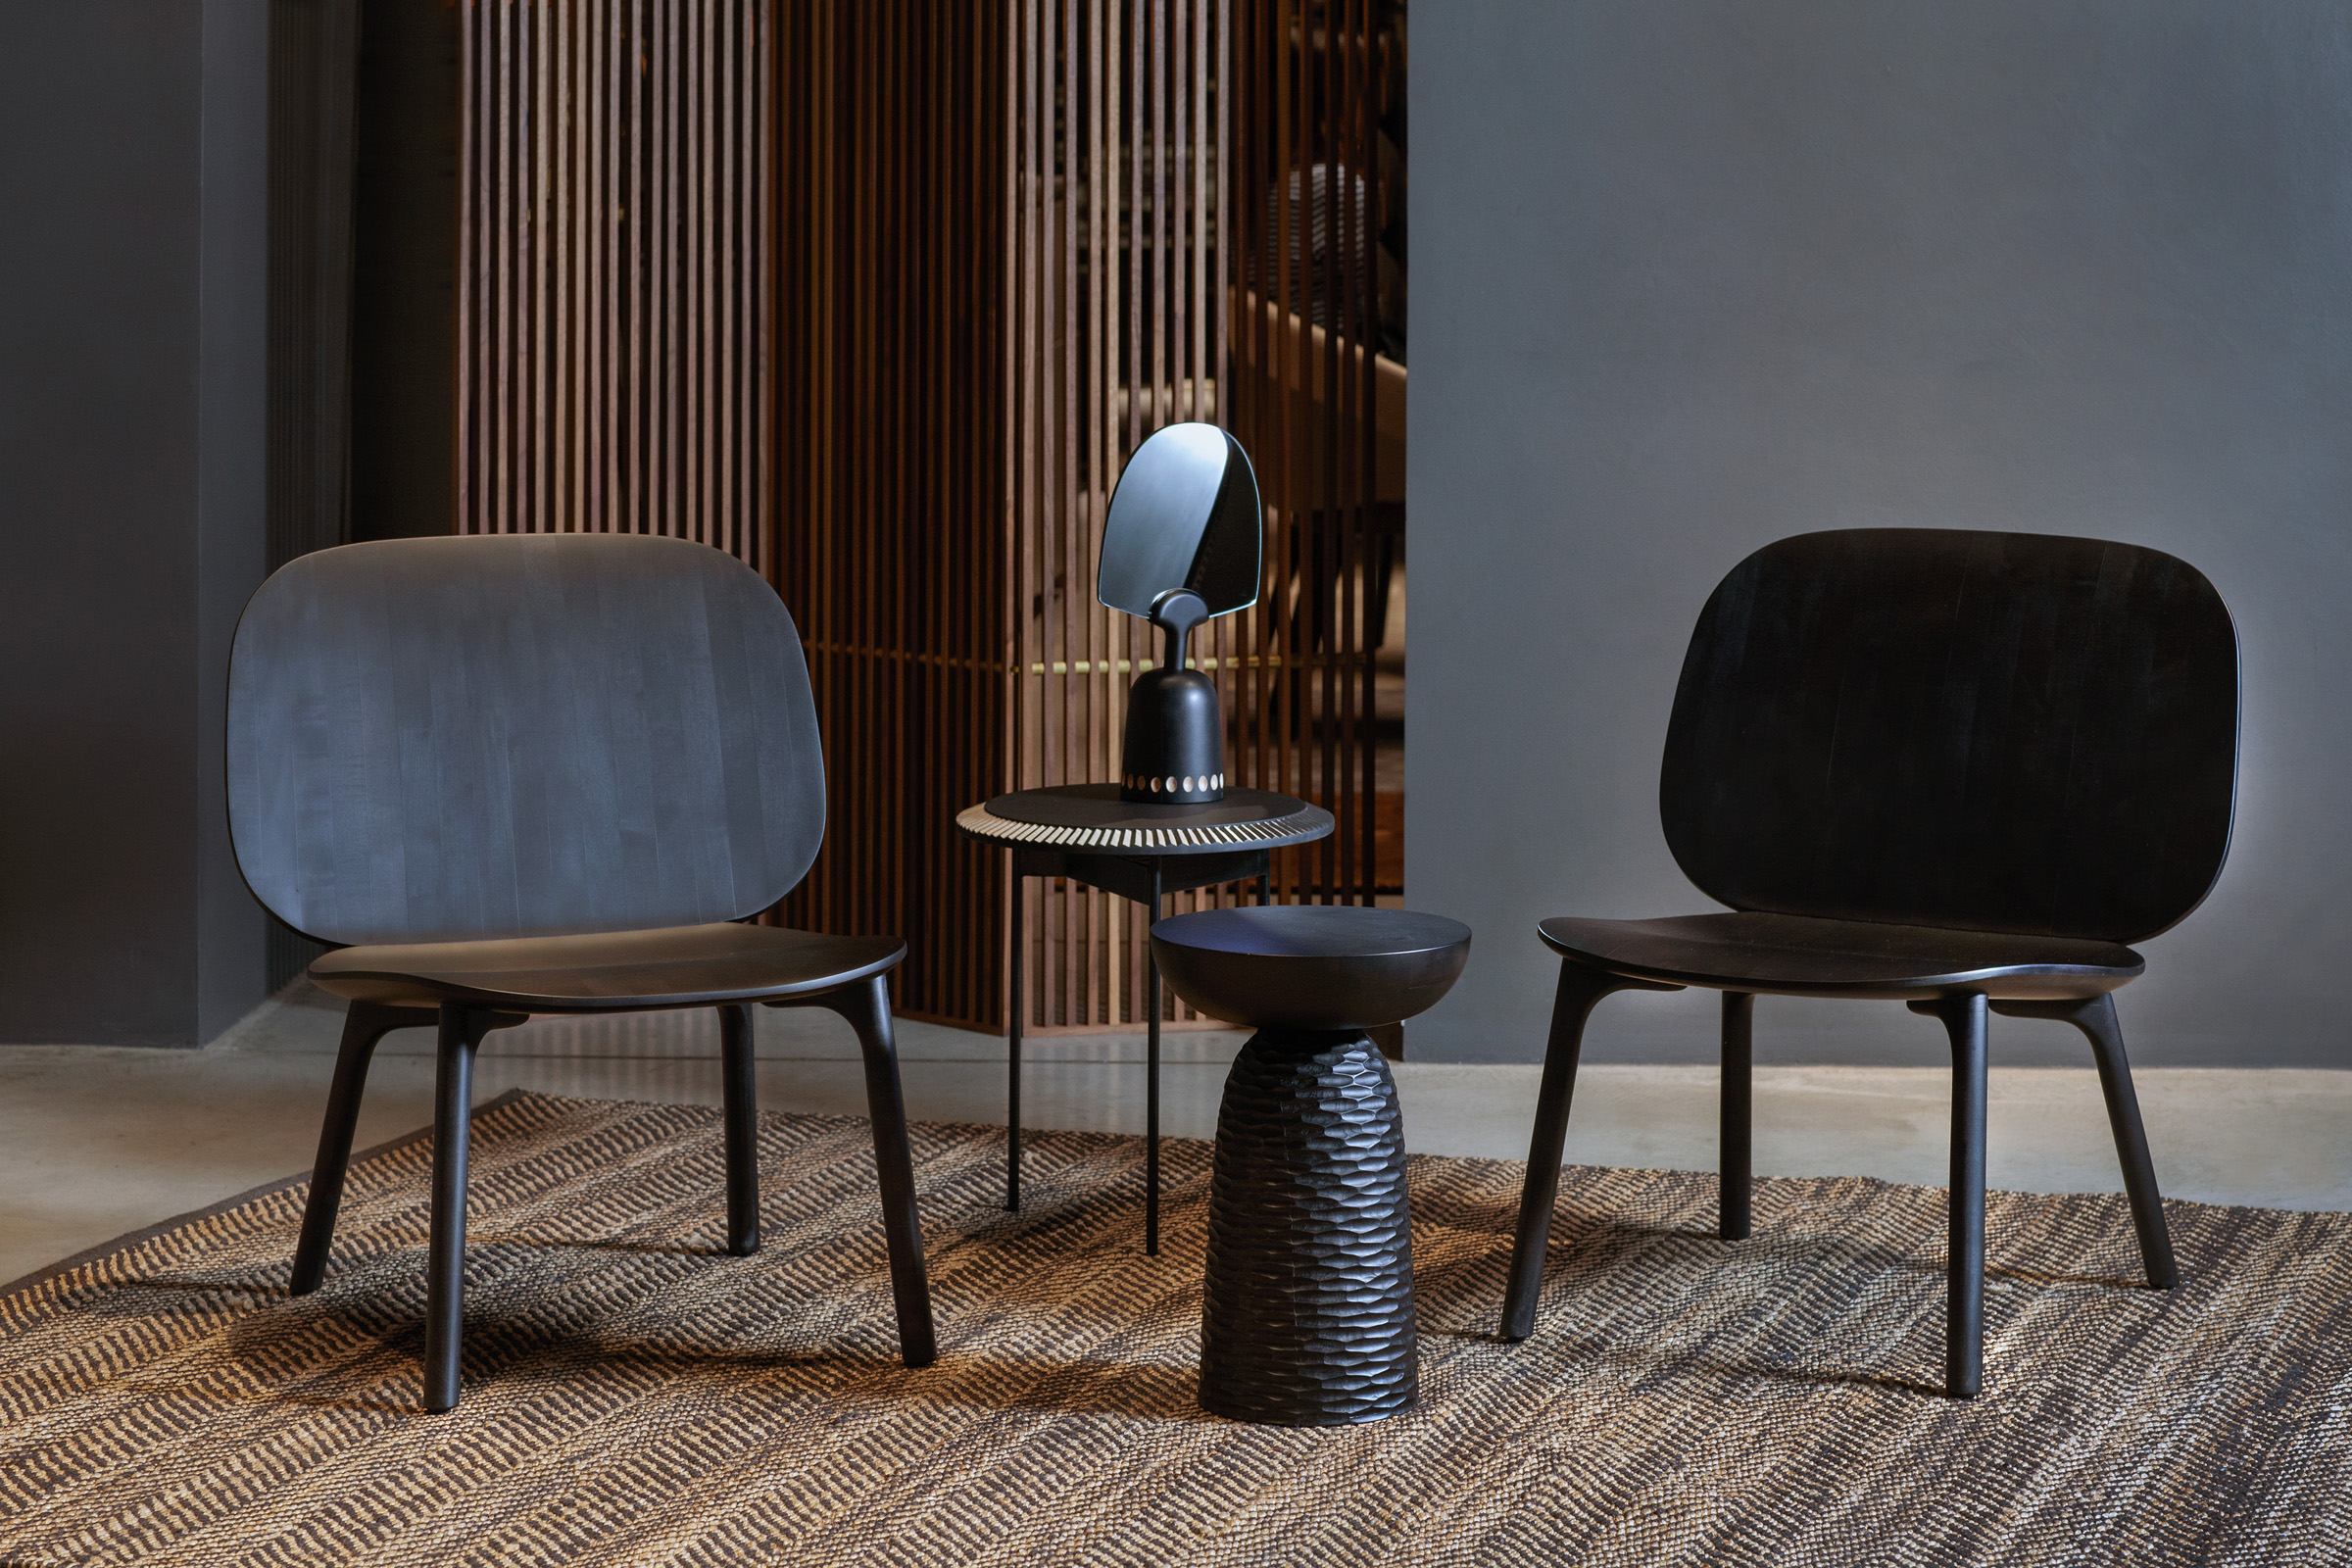 Zanat, Unna Lounge Chair. Monica Förster Design Studio